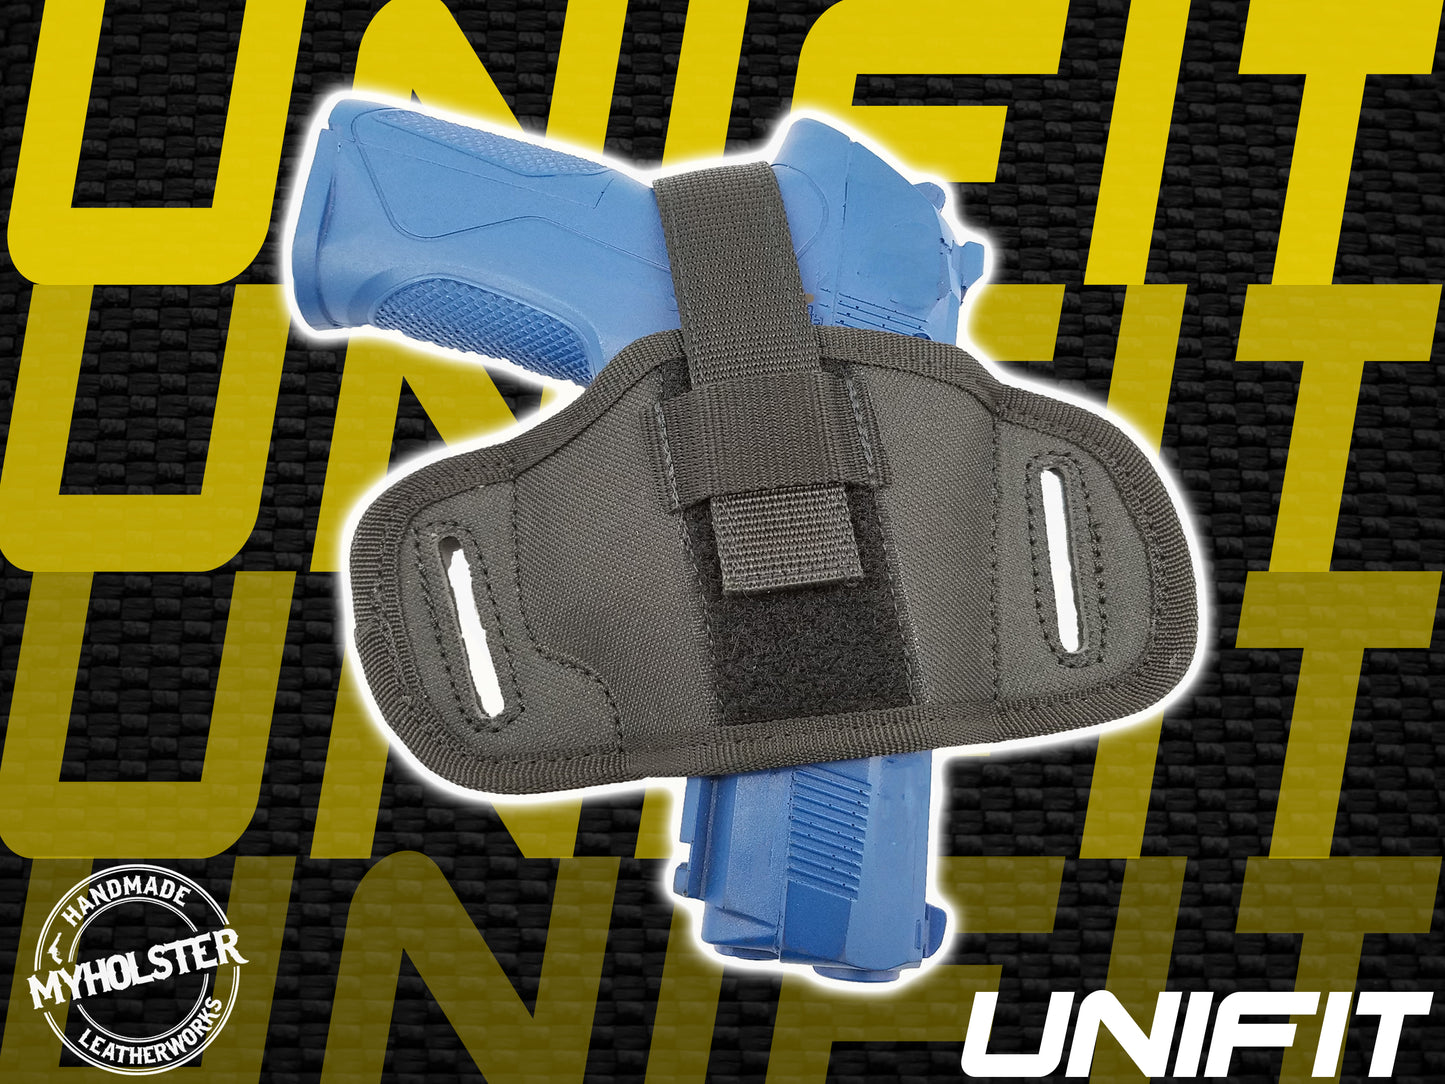 Universal Fit Holster (UNIFIT) Thumb Break Ambidextrous Semi-molded Pancake Belt Holster